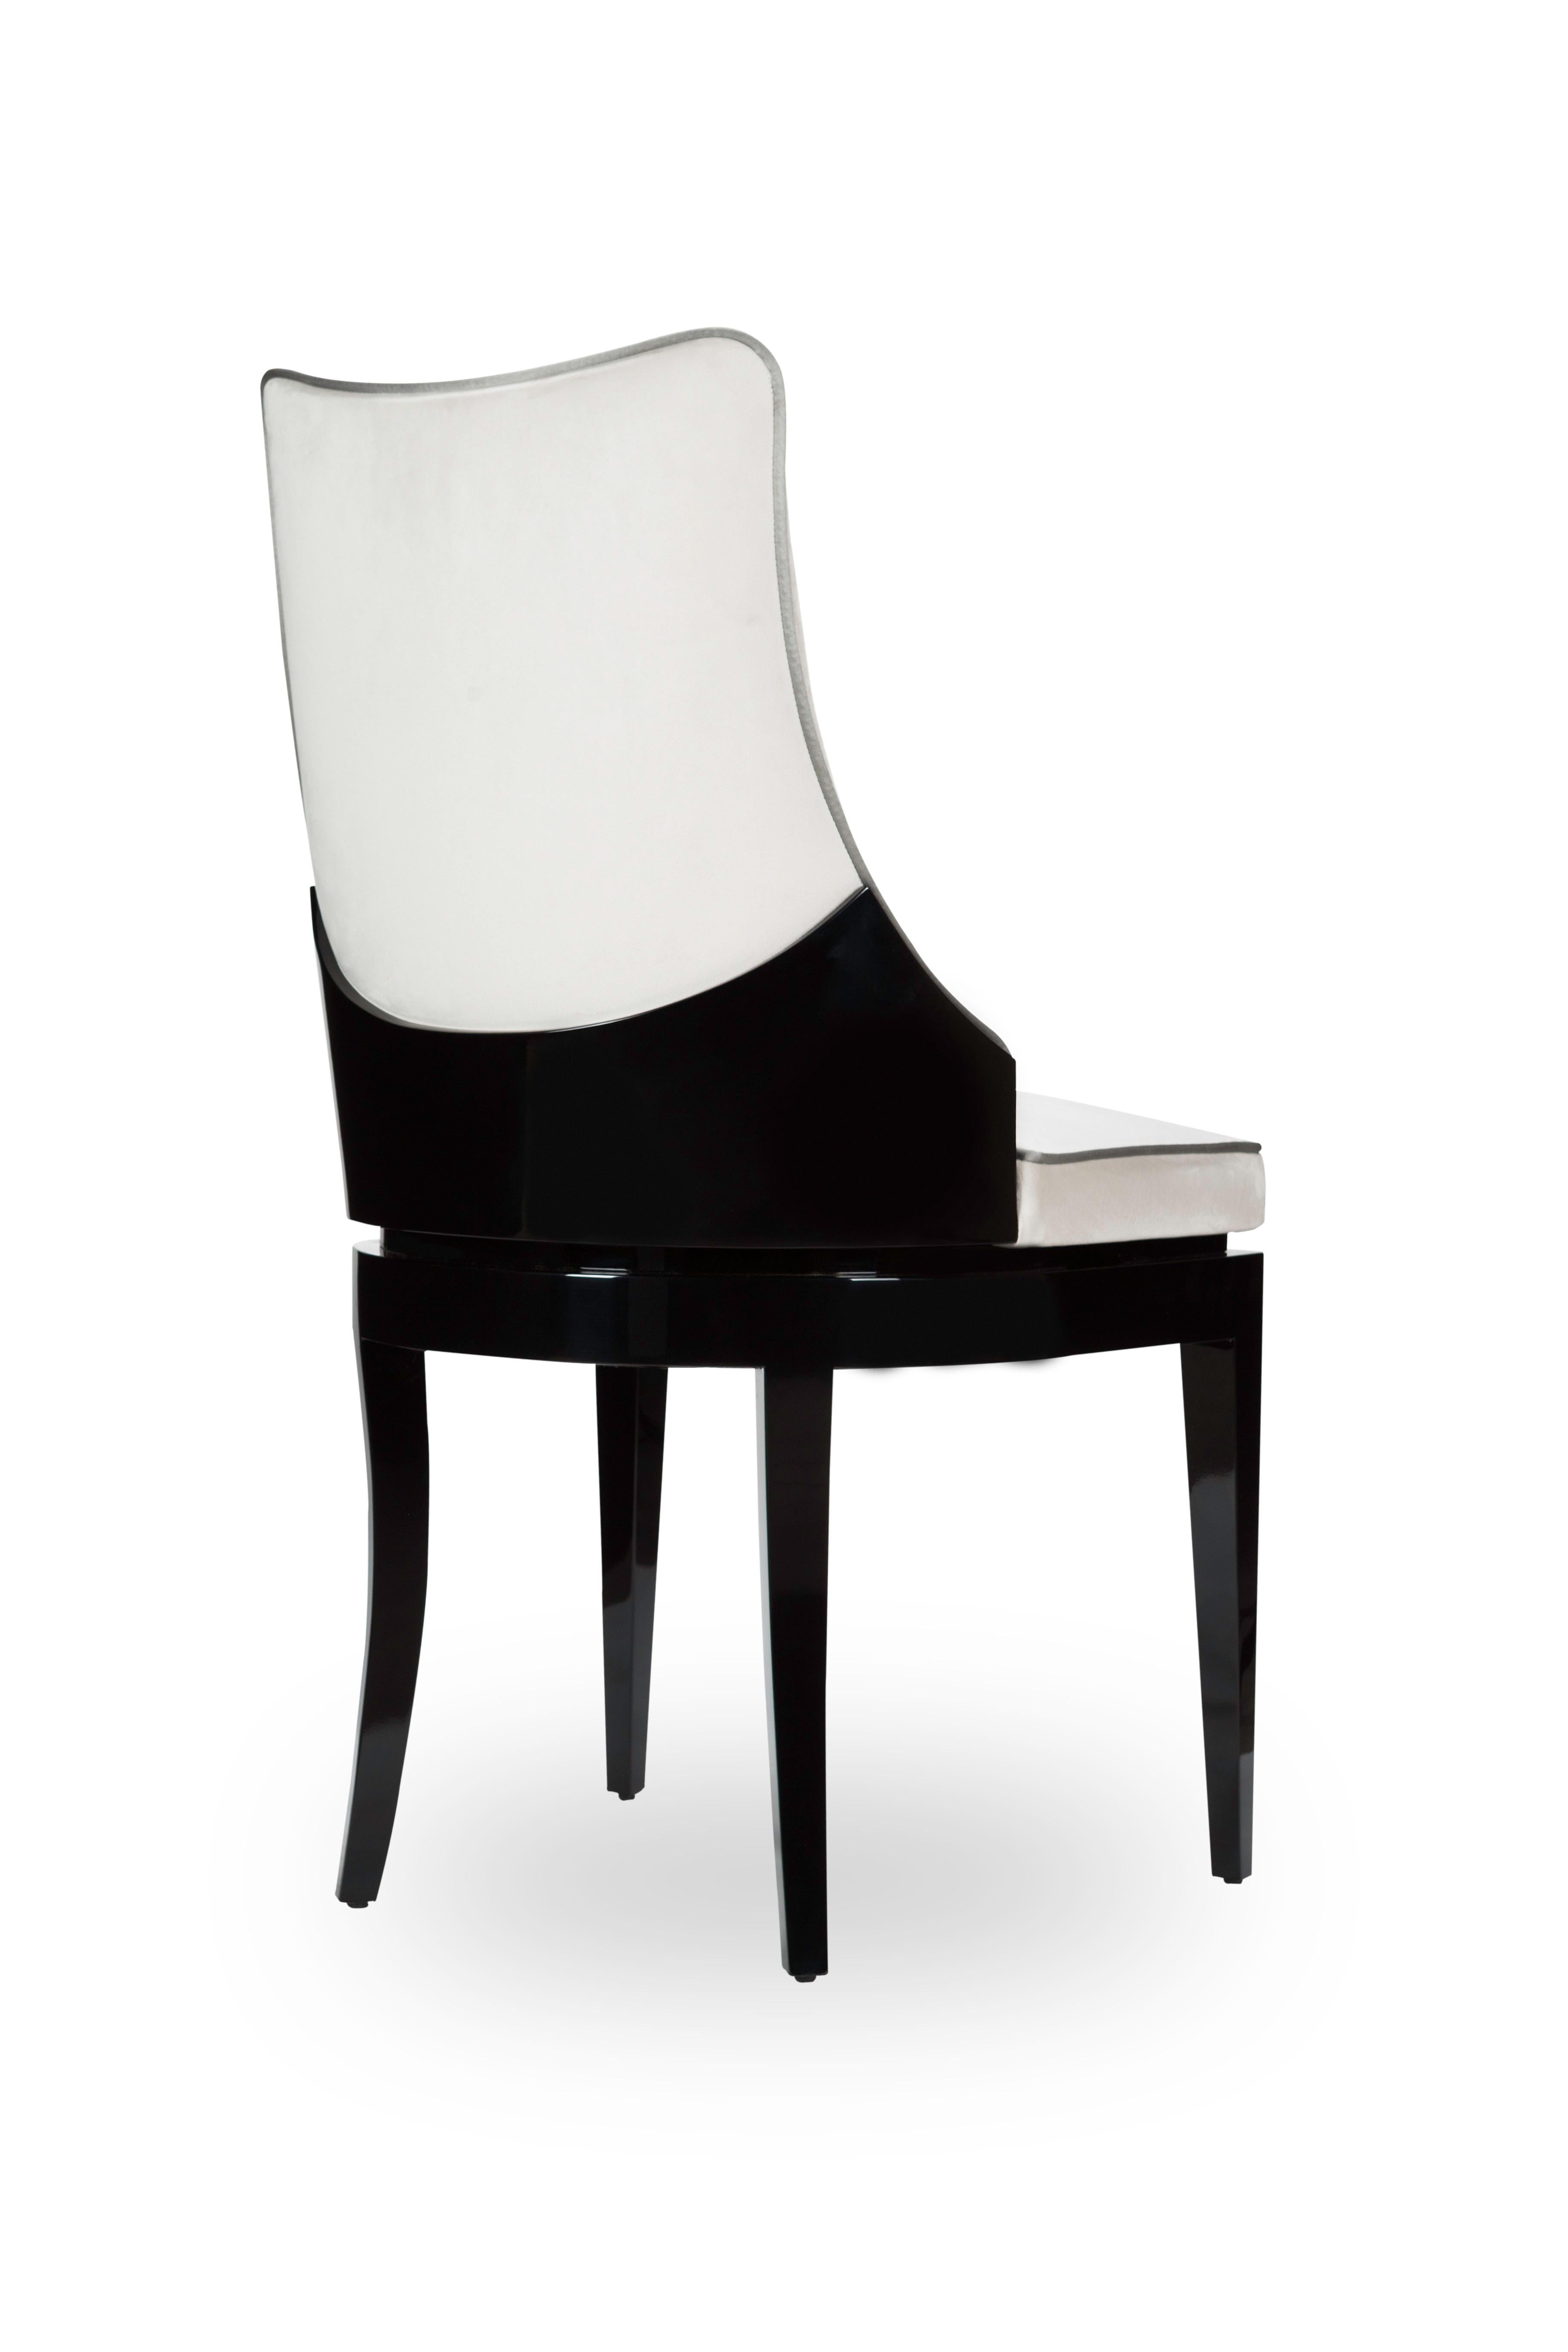 Portuguese Noir II Dining Chair by Memoir Essence For Sale